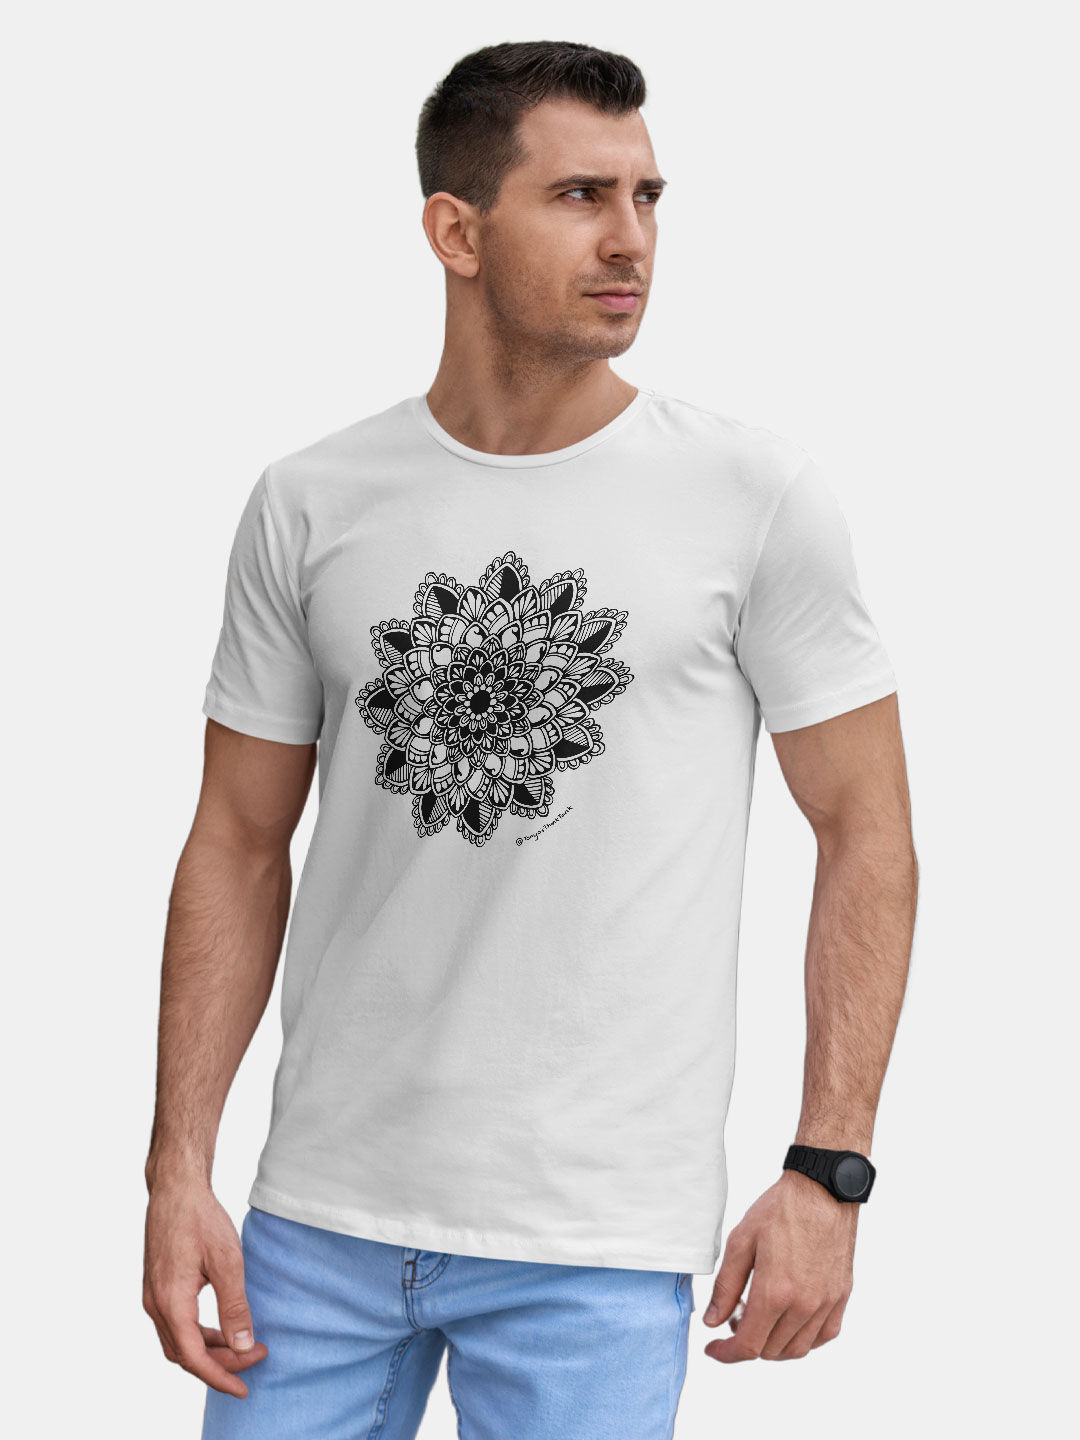 Buy Mandala White - Male Designer T-Shirts T-Shirts Online